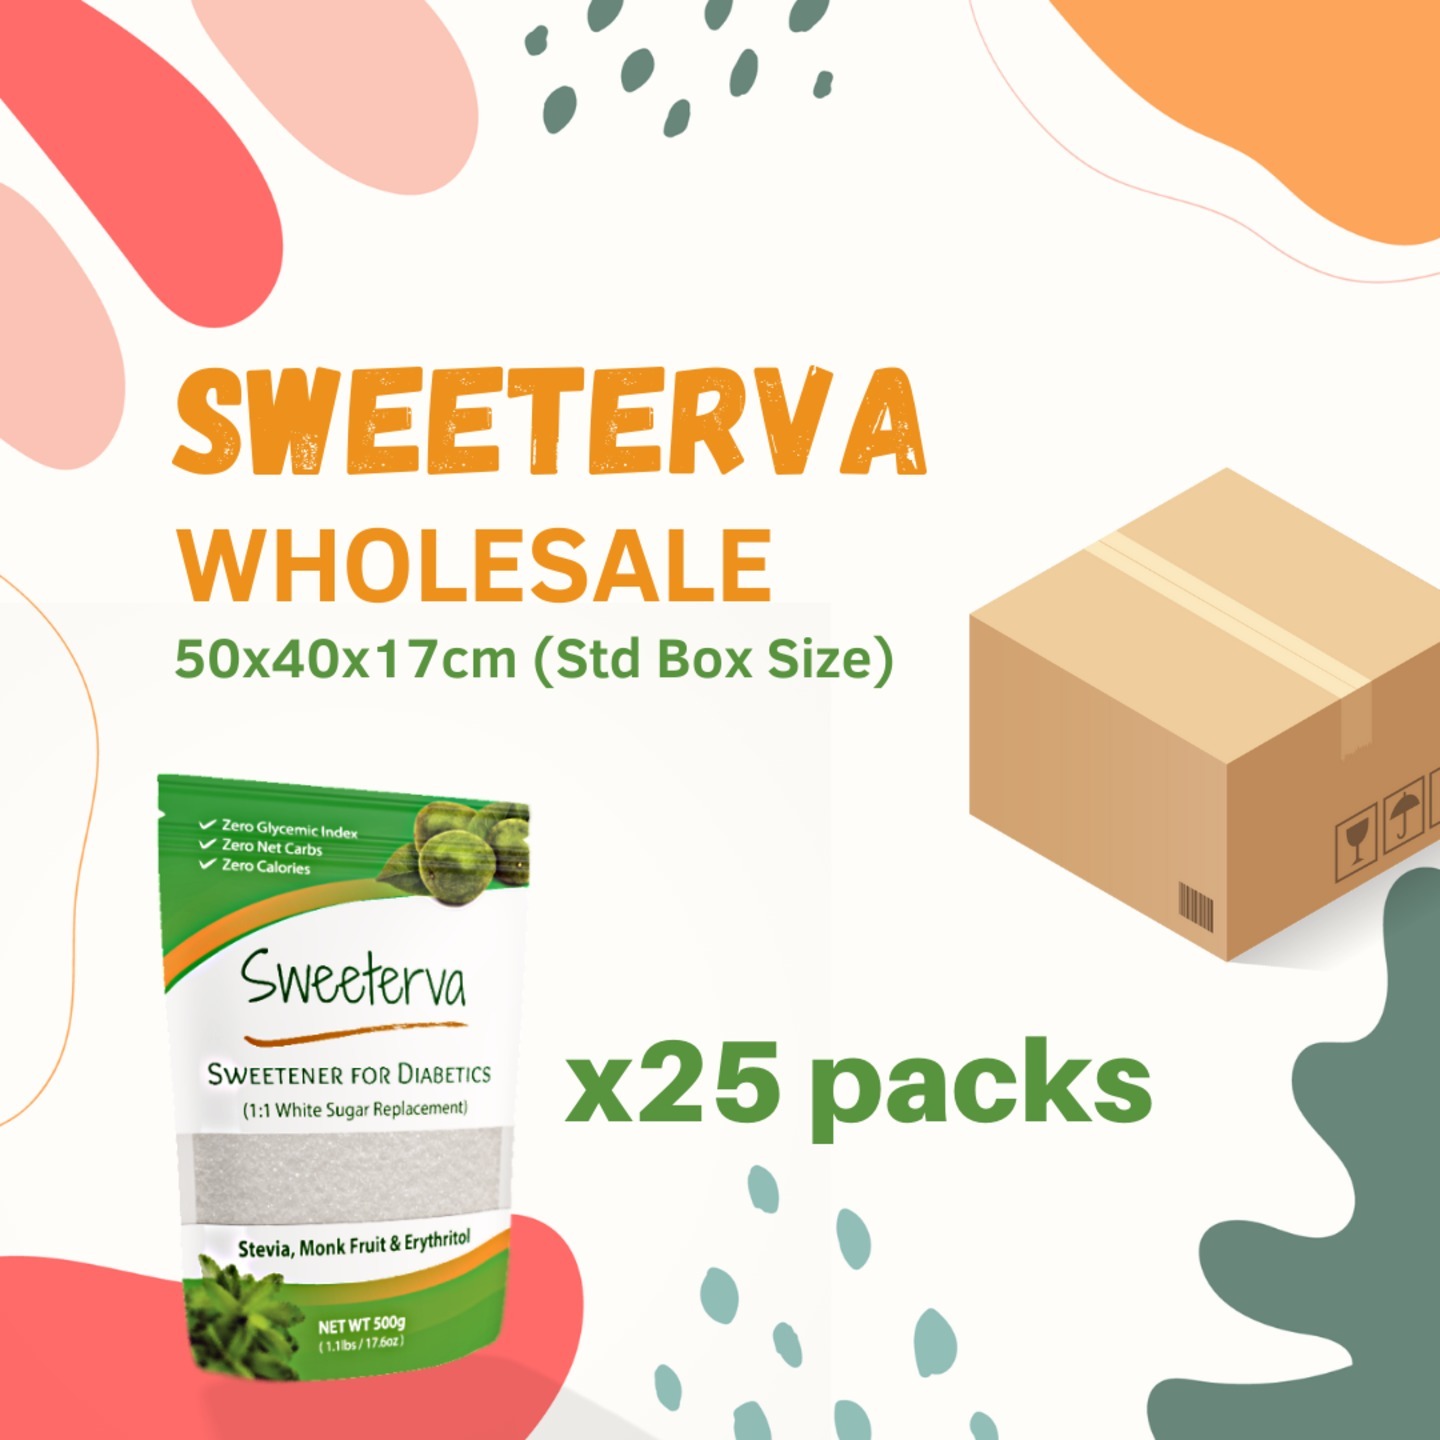 Sweeterva Wholesale